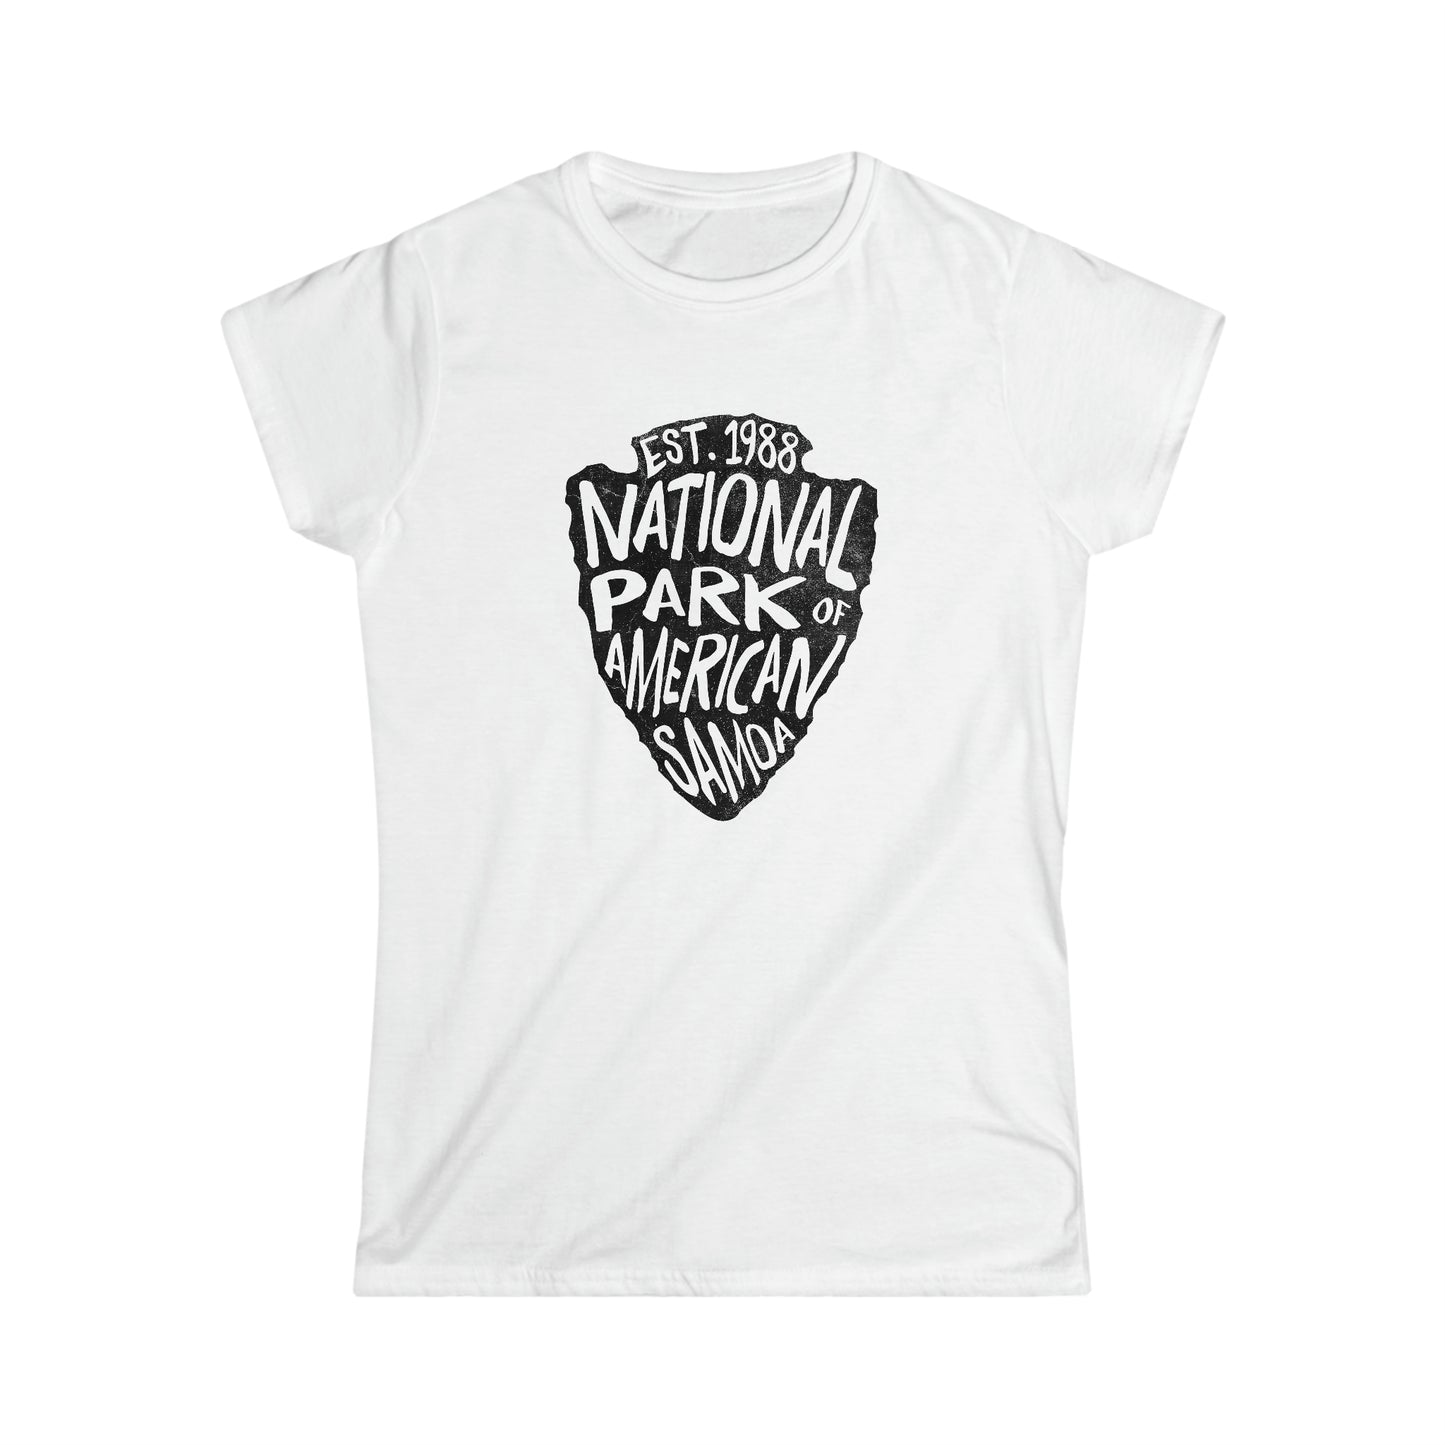 National Park of American Samoa Women's T-Shirt - Arrowhead Design